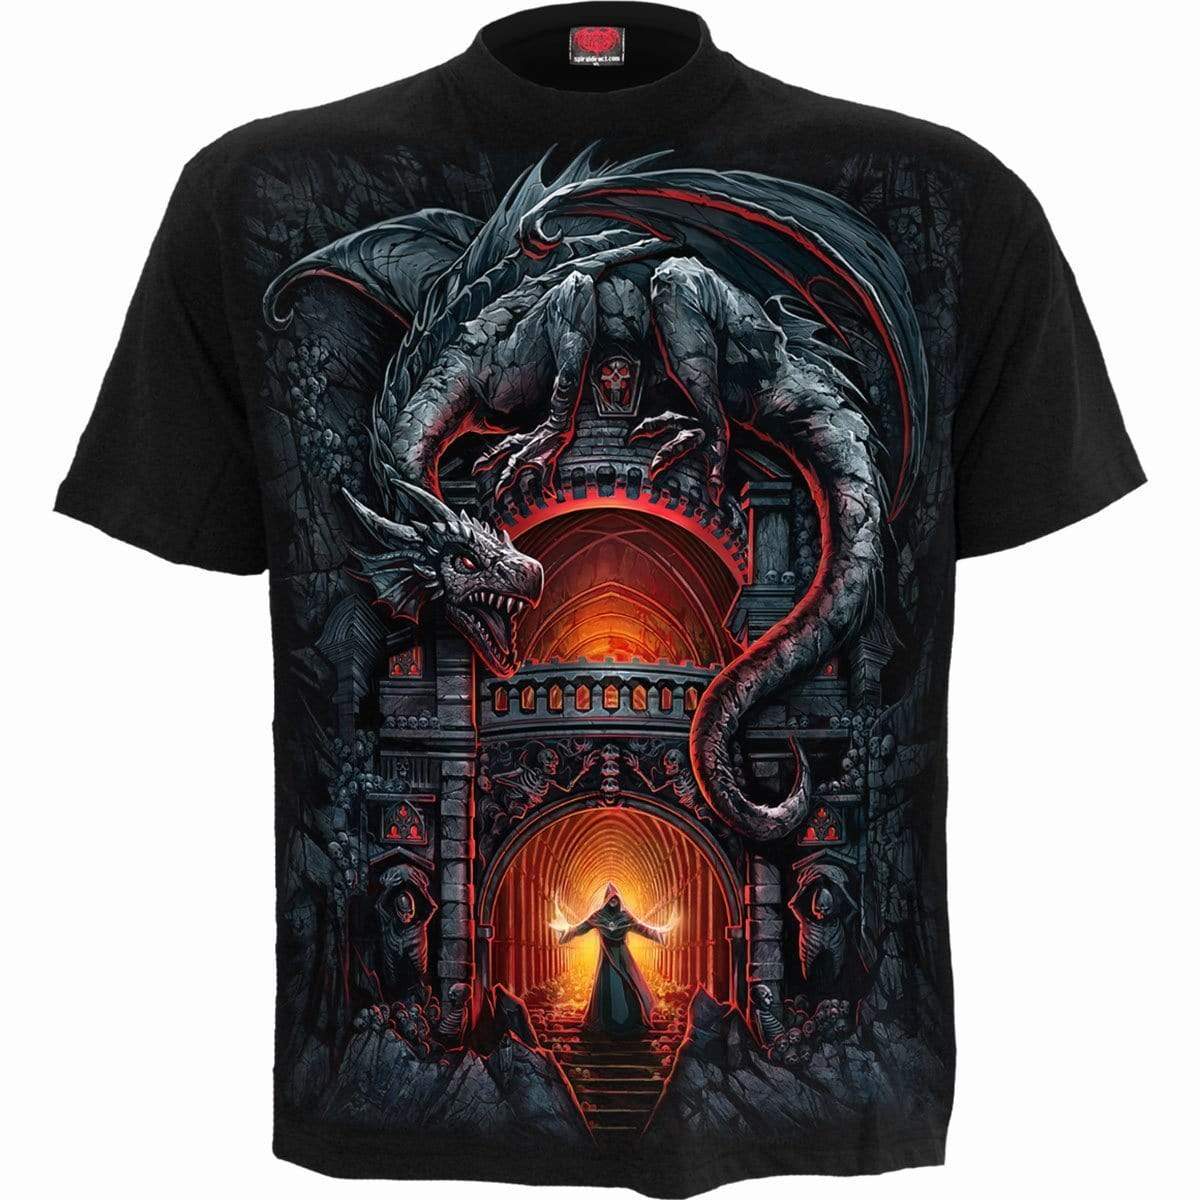 DRAGON'S LAIR - T-Shirt Black - Spiral USA